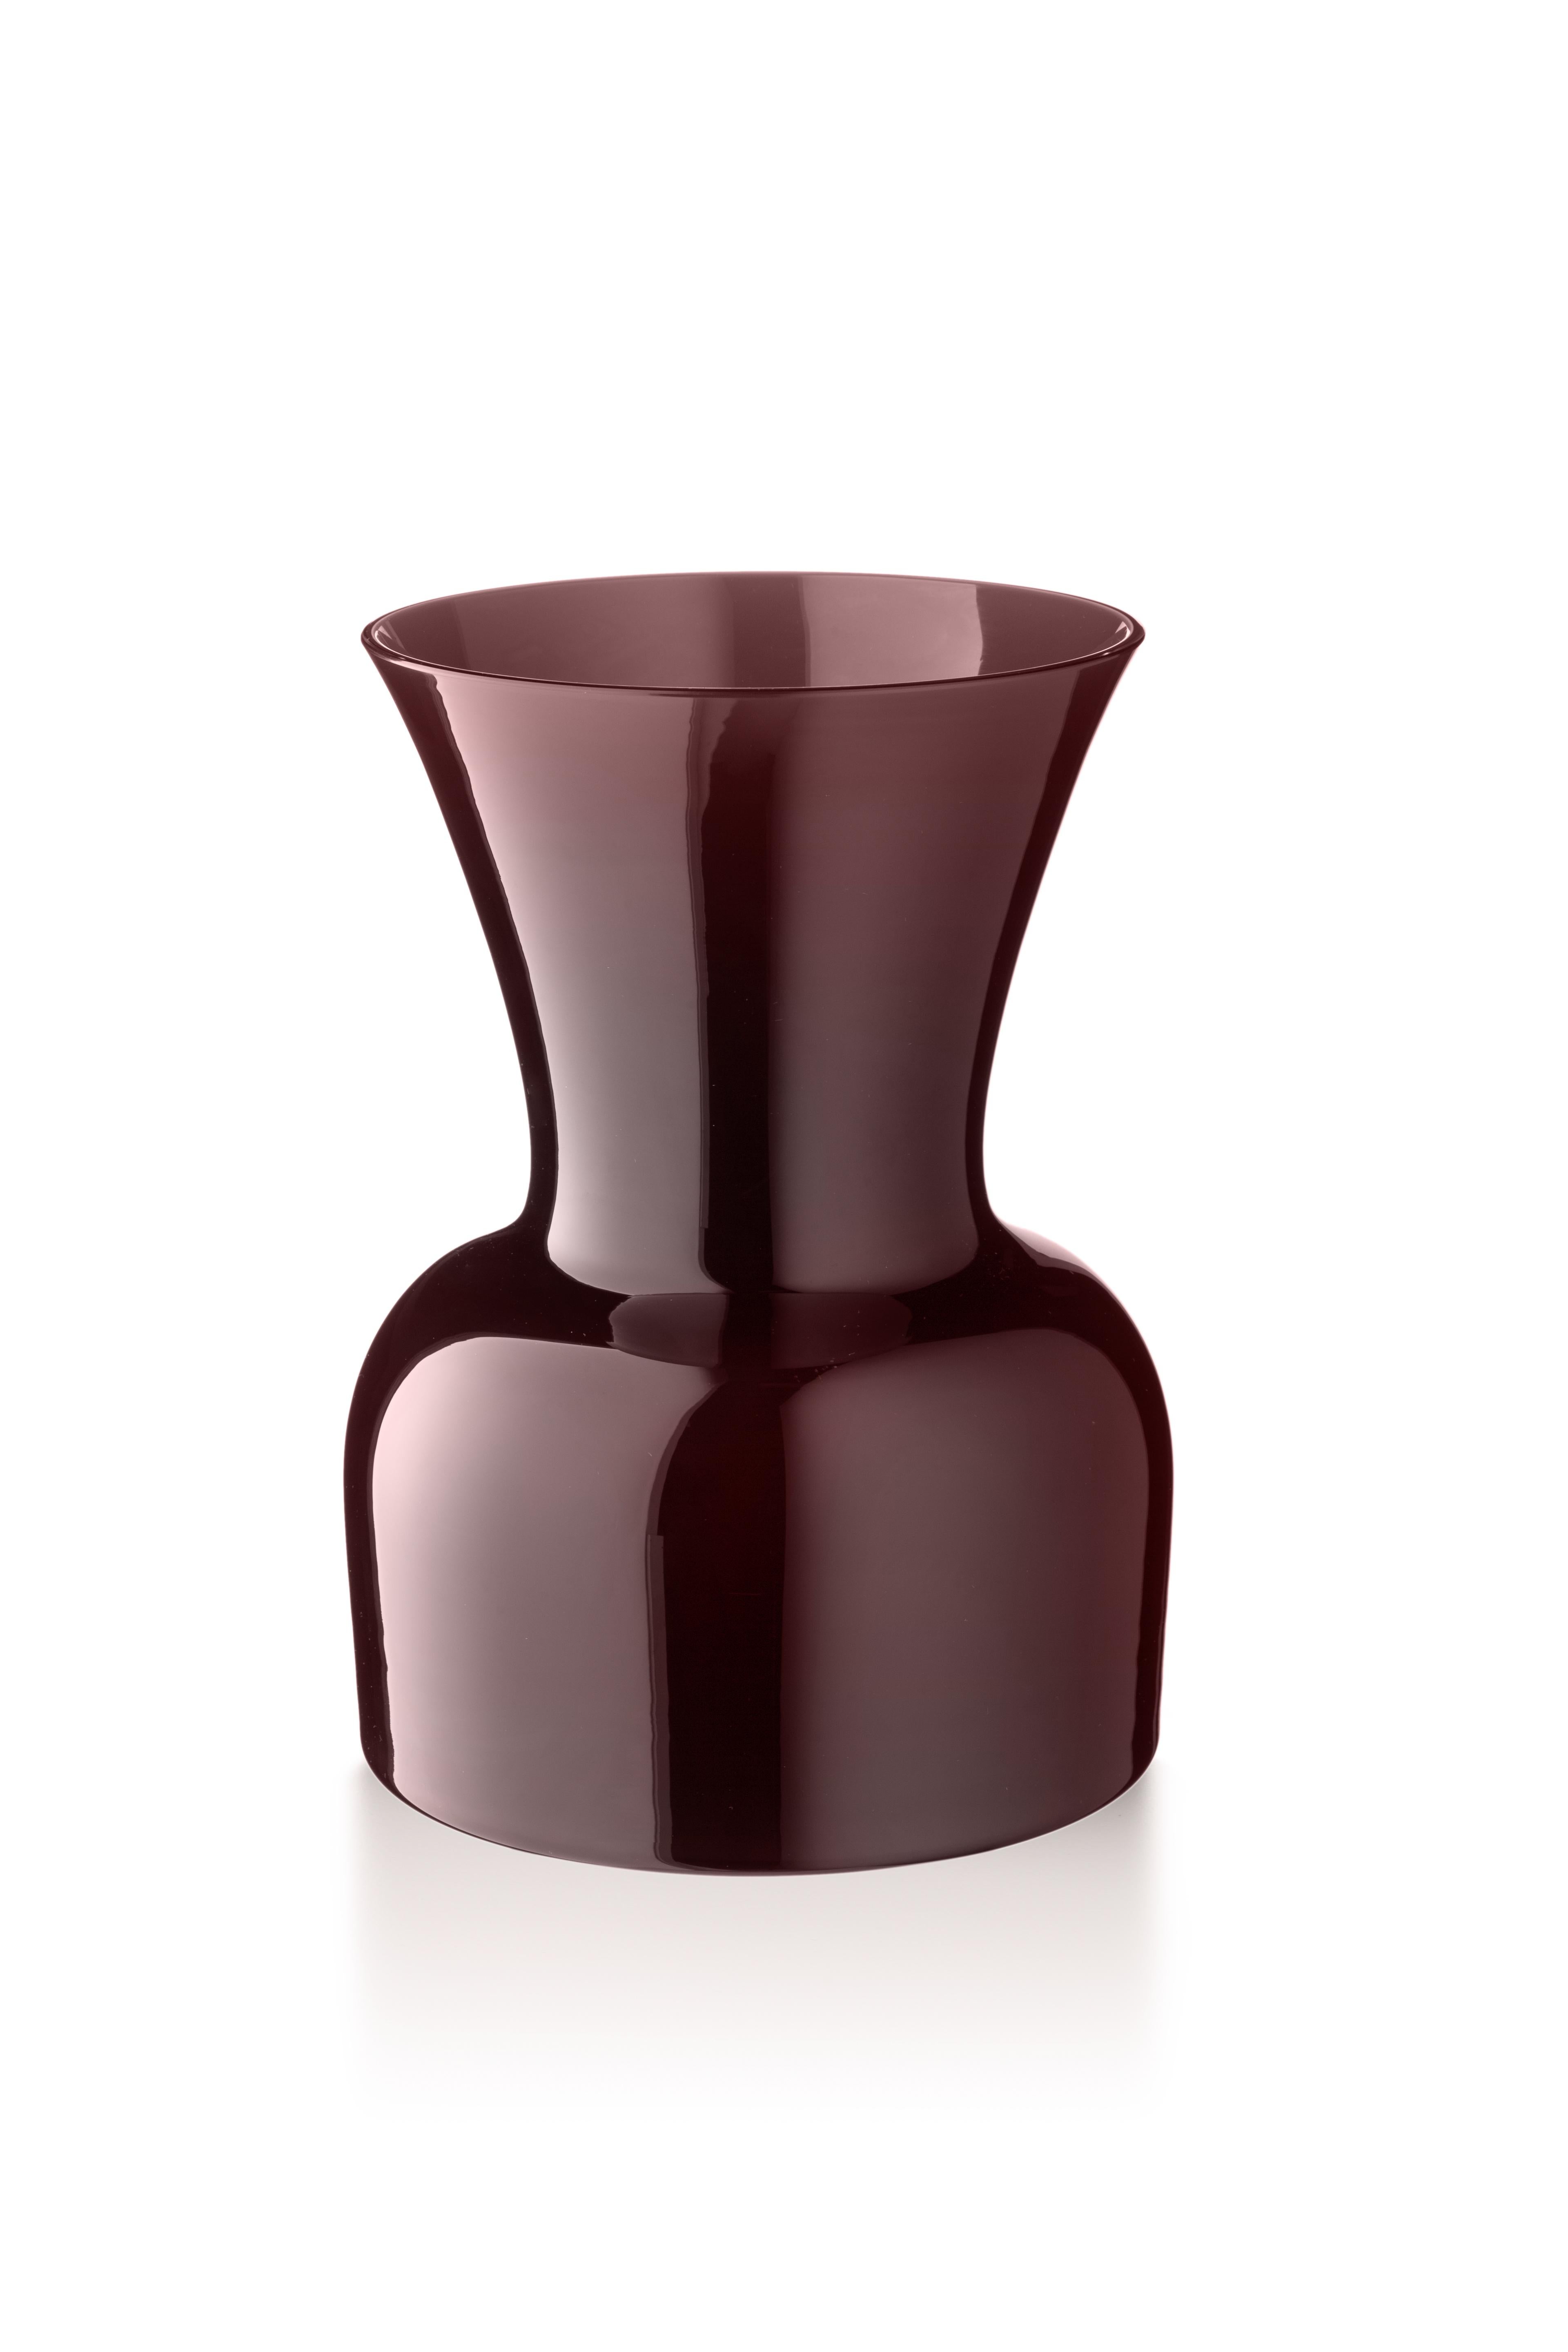 Purple (10060) Large Profili Daisy Murano Glass Vase by Anna Gili